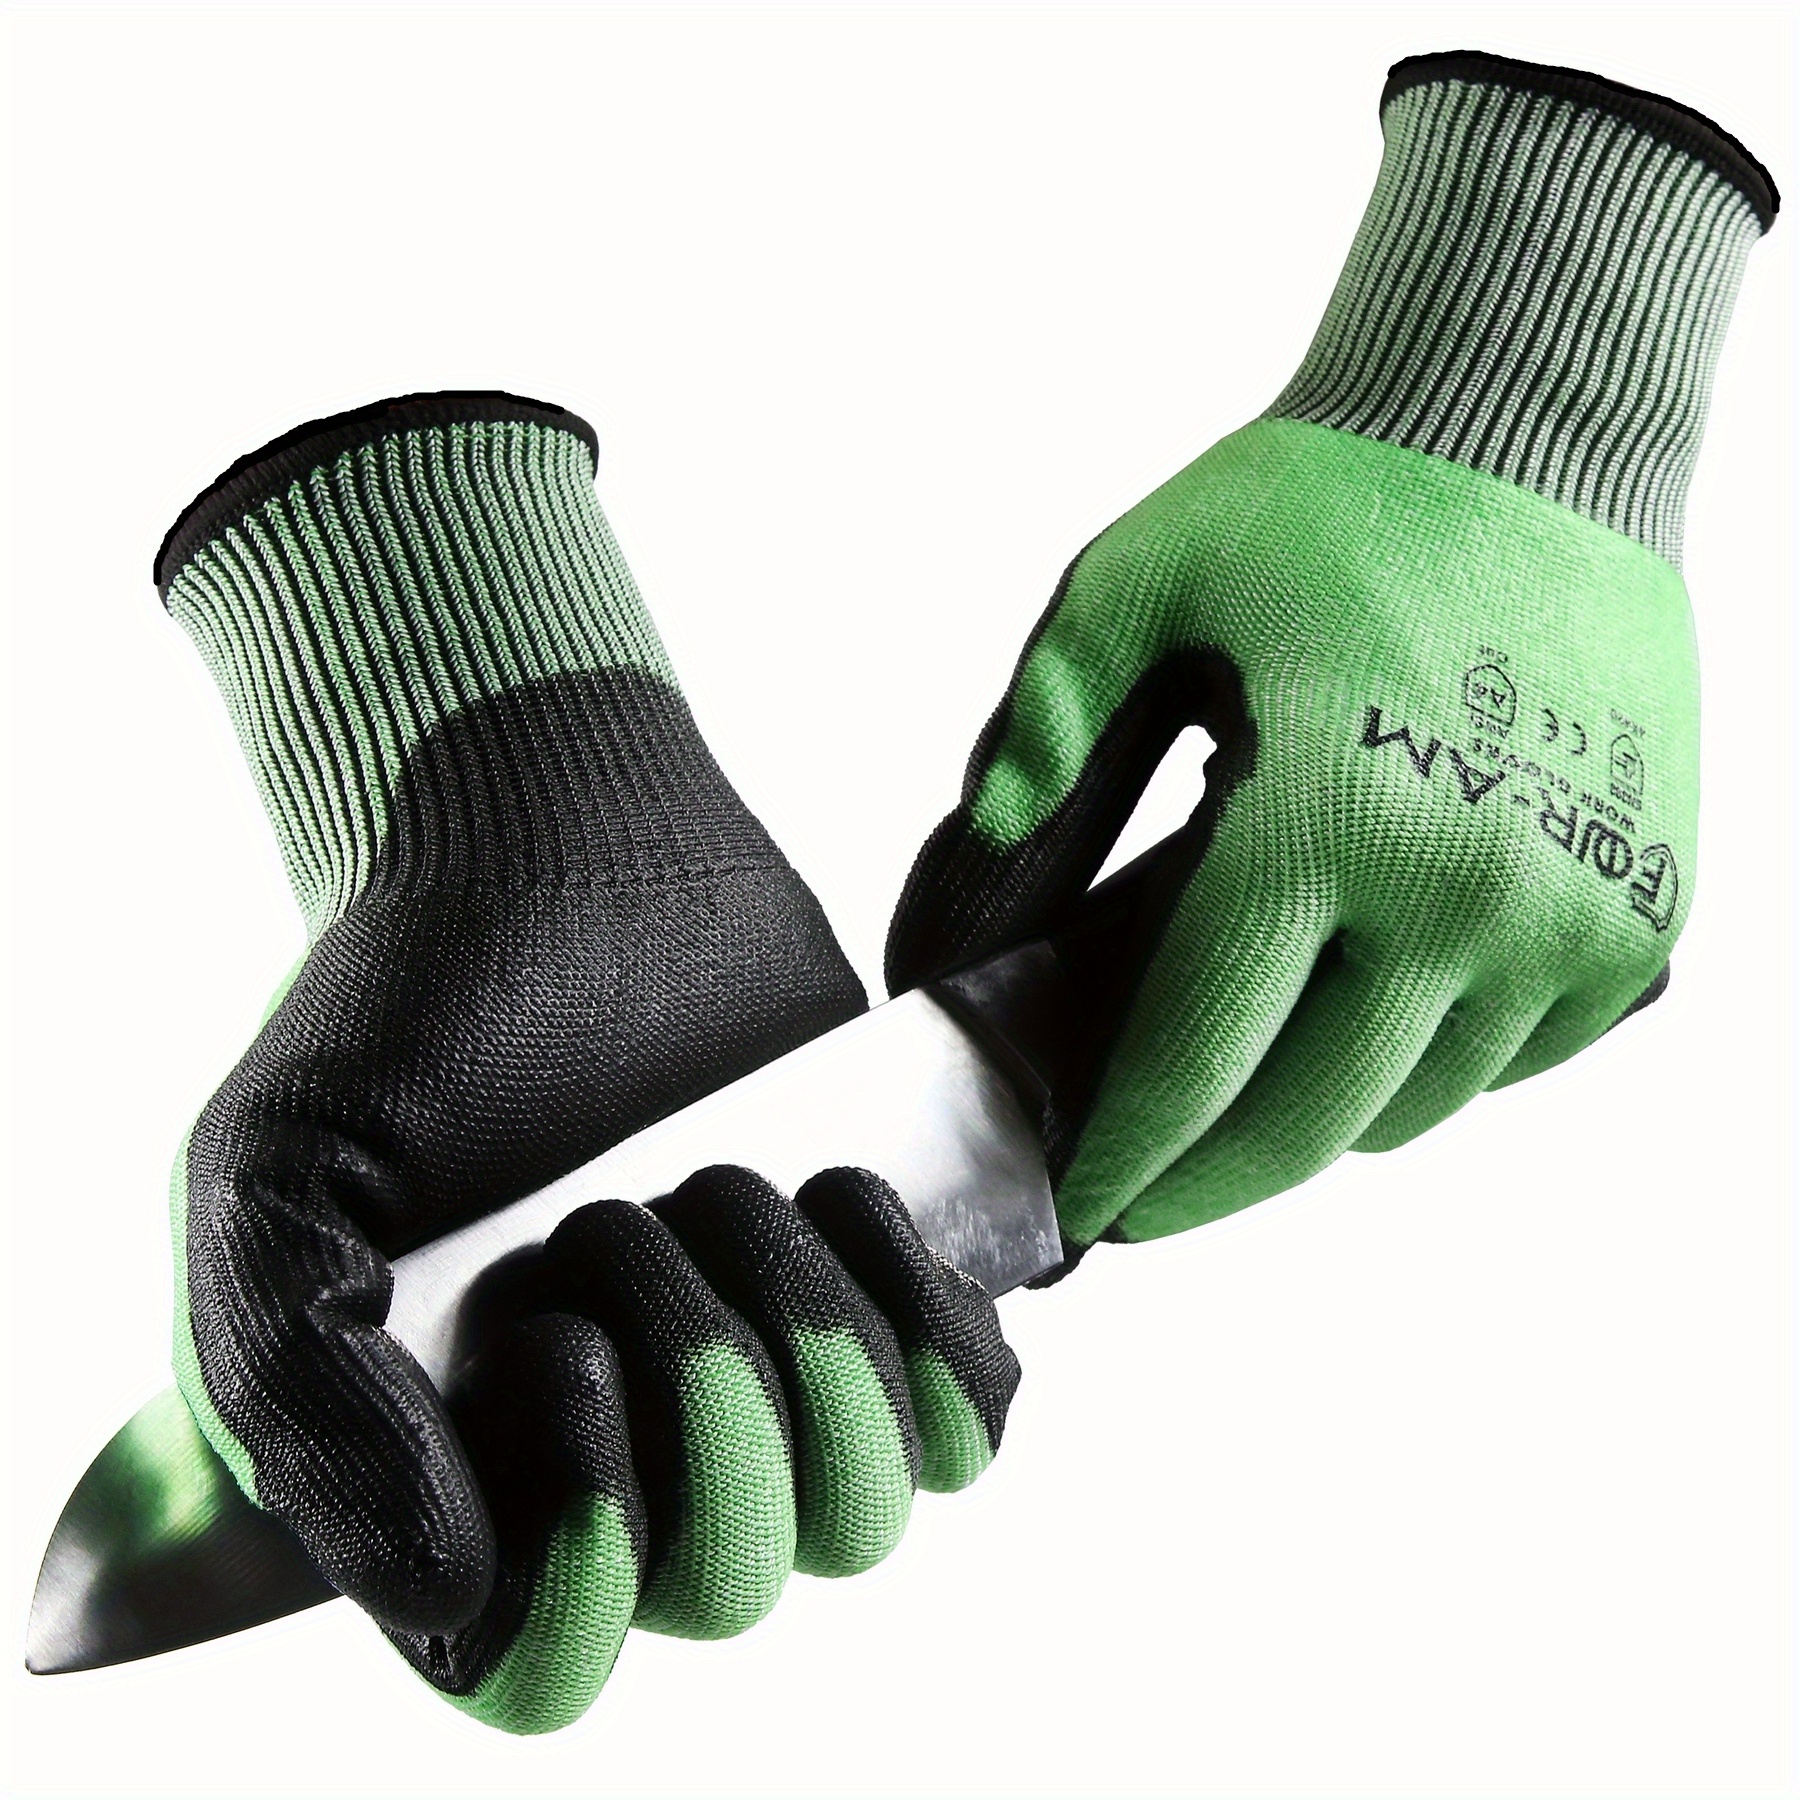 1 Pair, 5 Level Cut Resistant Gloves, Durable Cut Proof Work